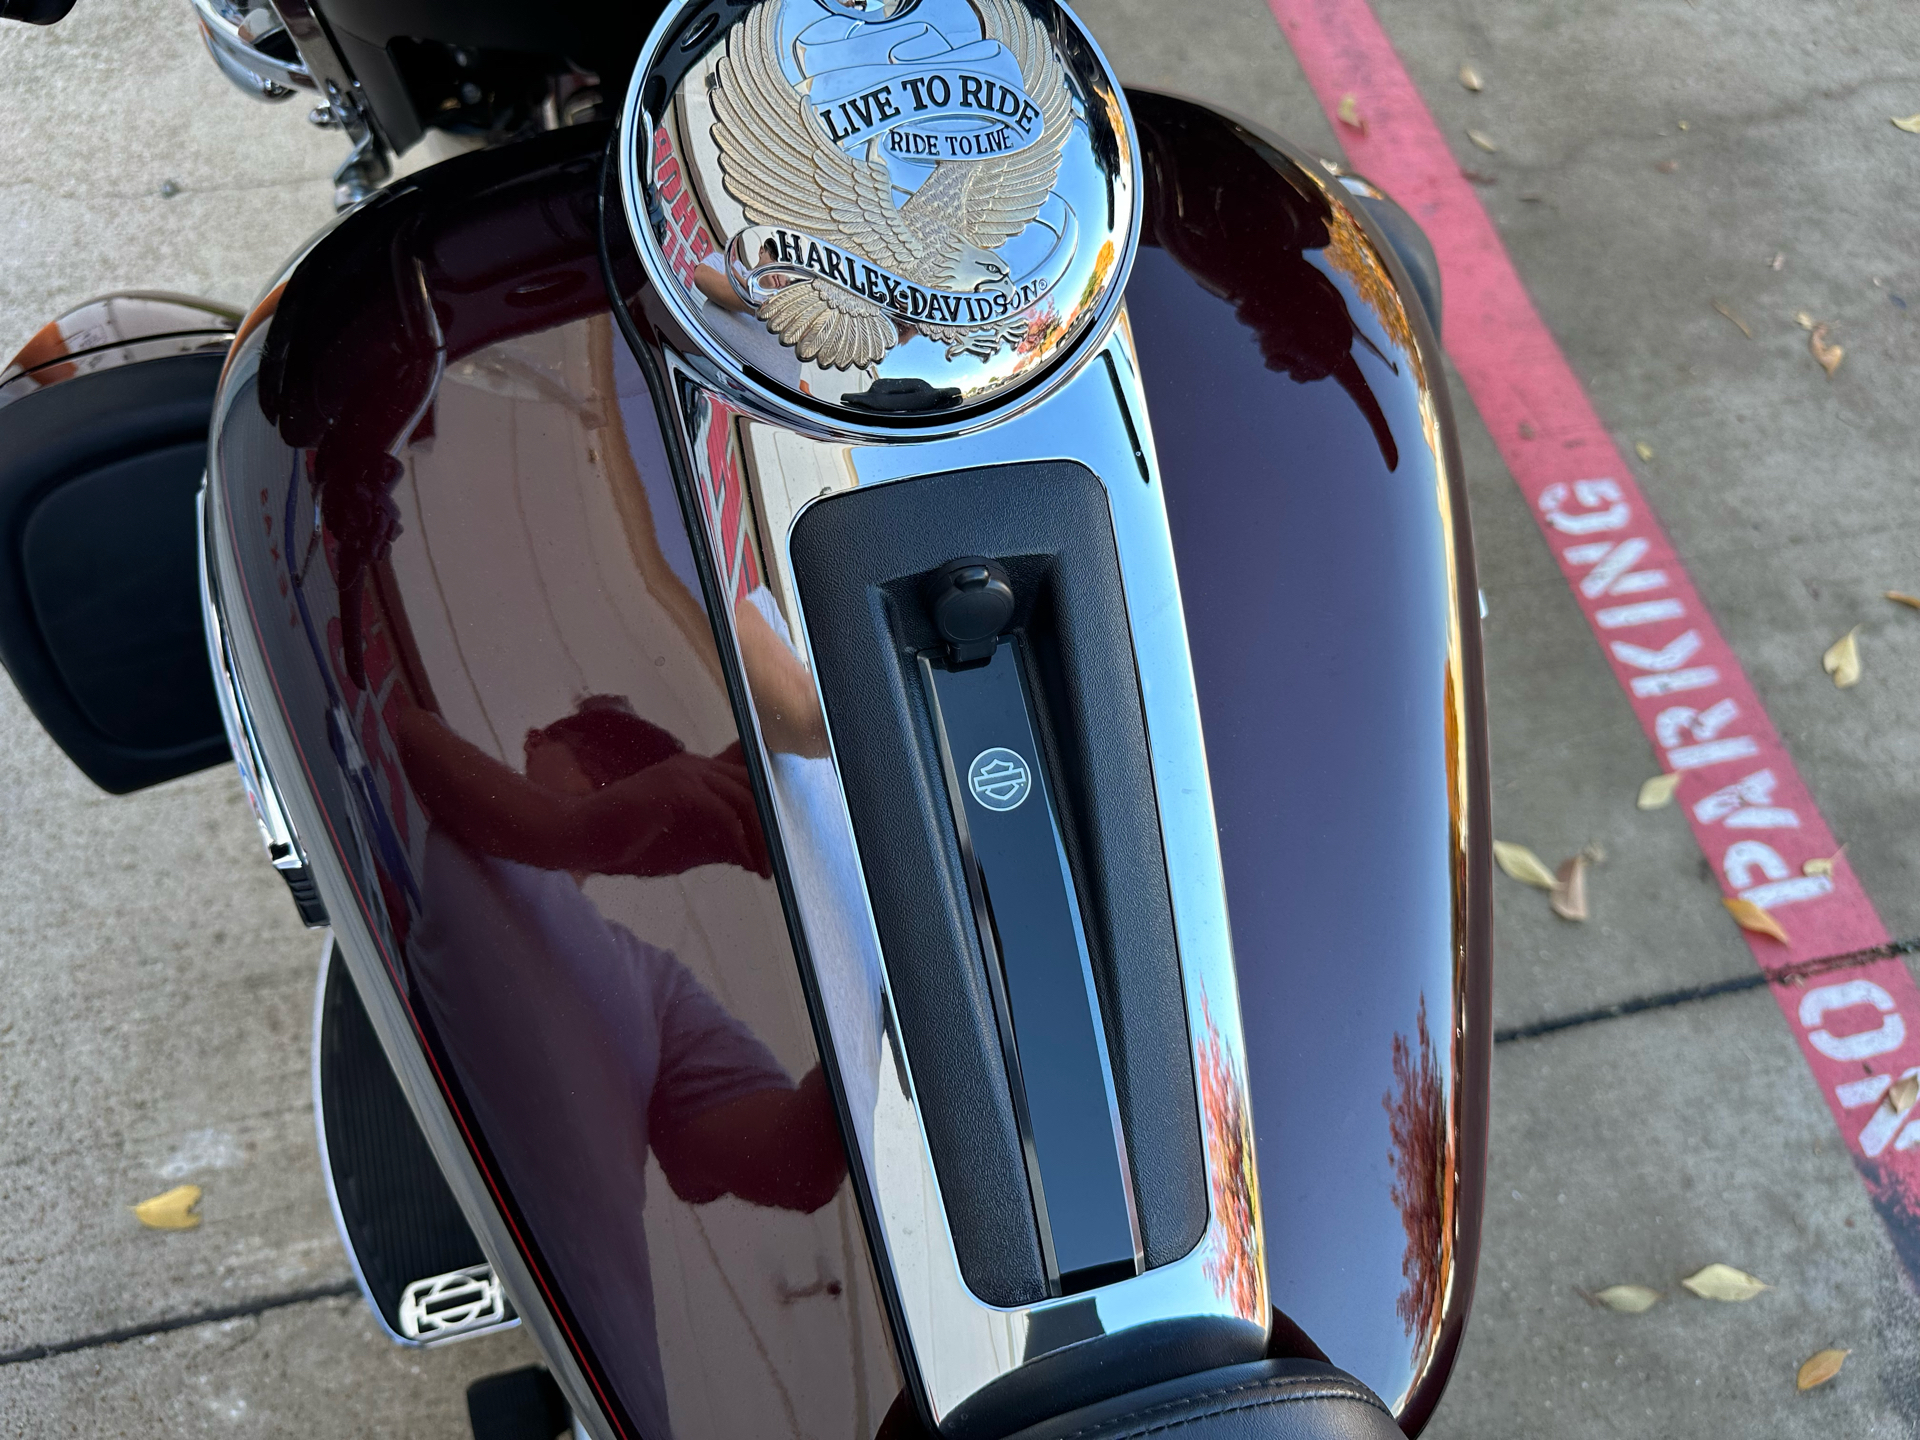 2018 Harley-Davidson Tri Glide® Ultra in Grand Prairie, Texas - Photo 4